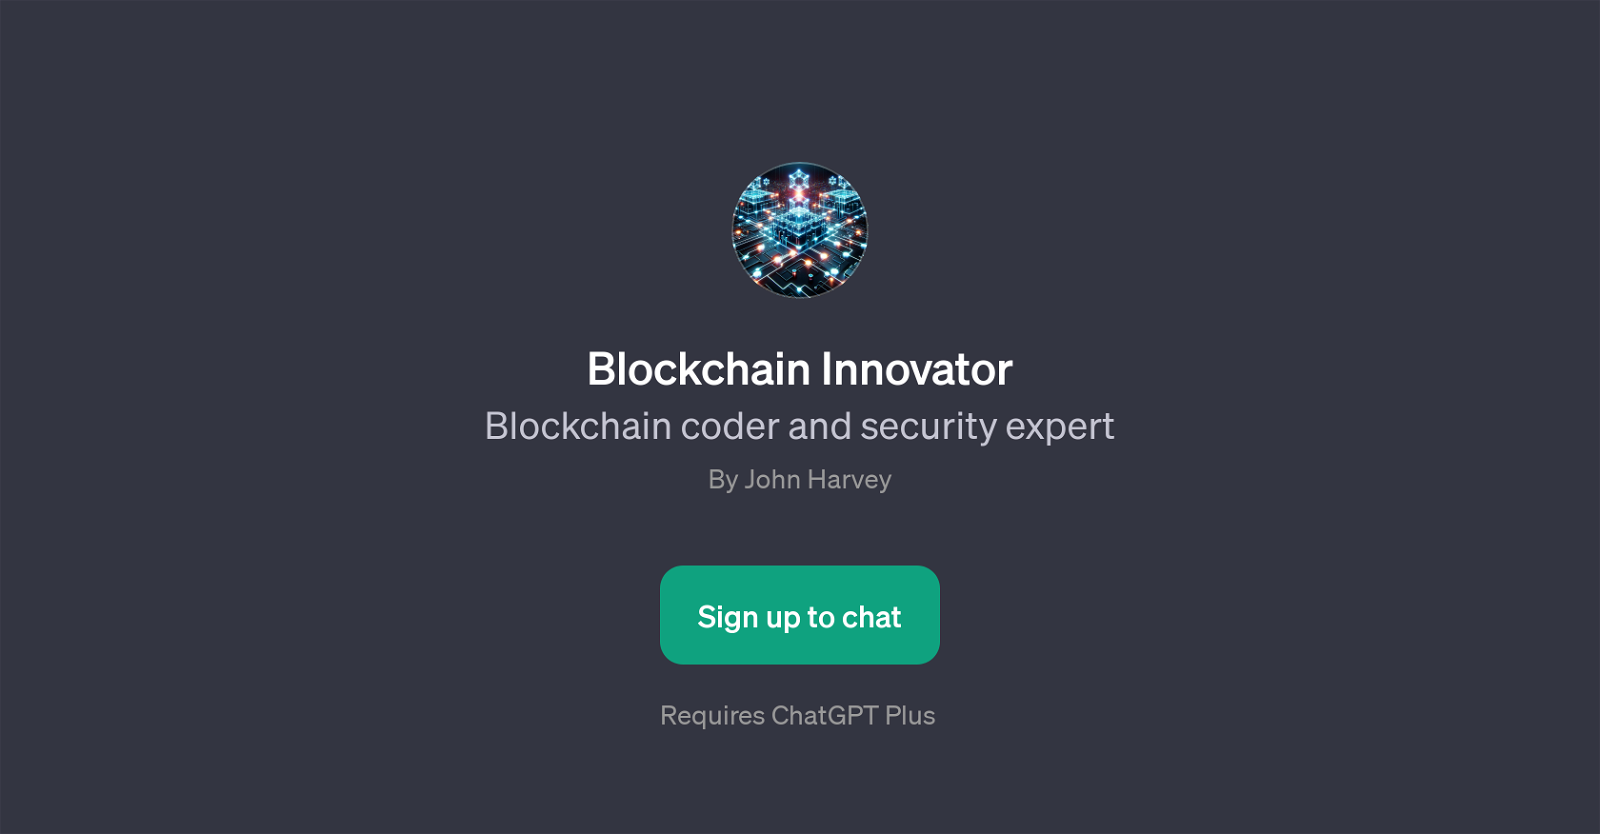 Blockchain Innovator website